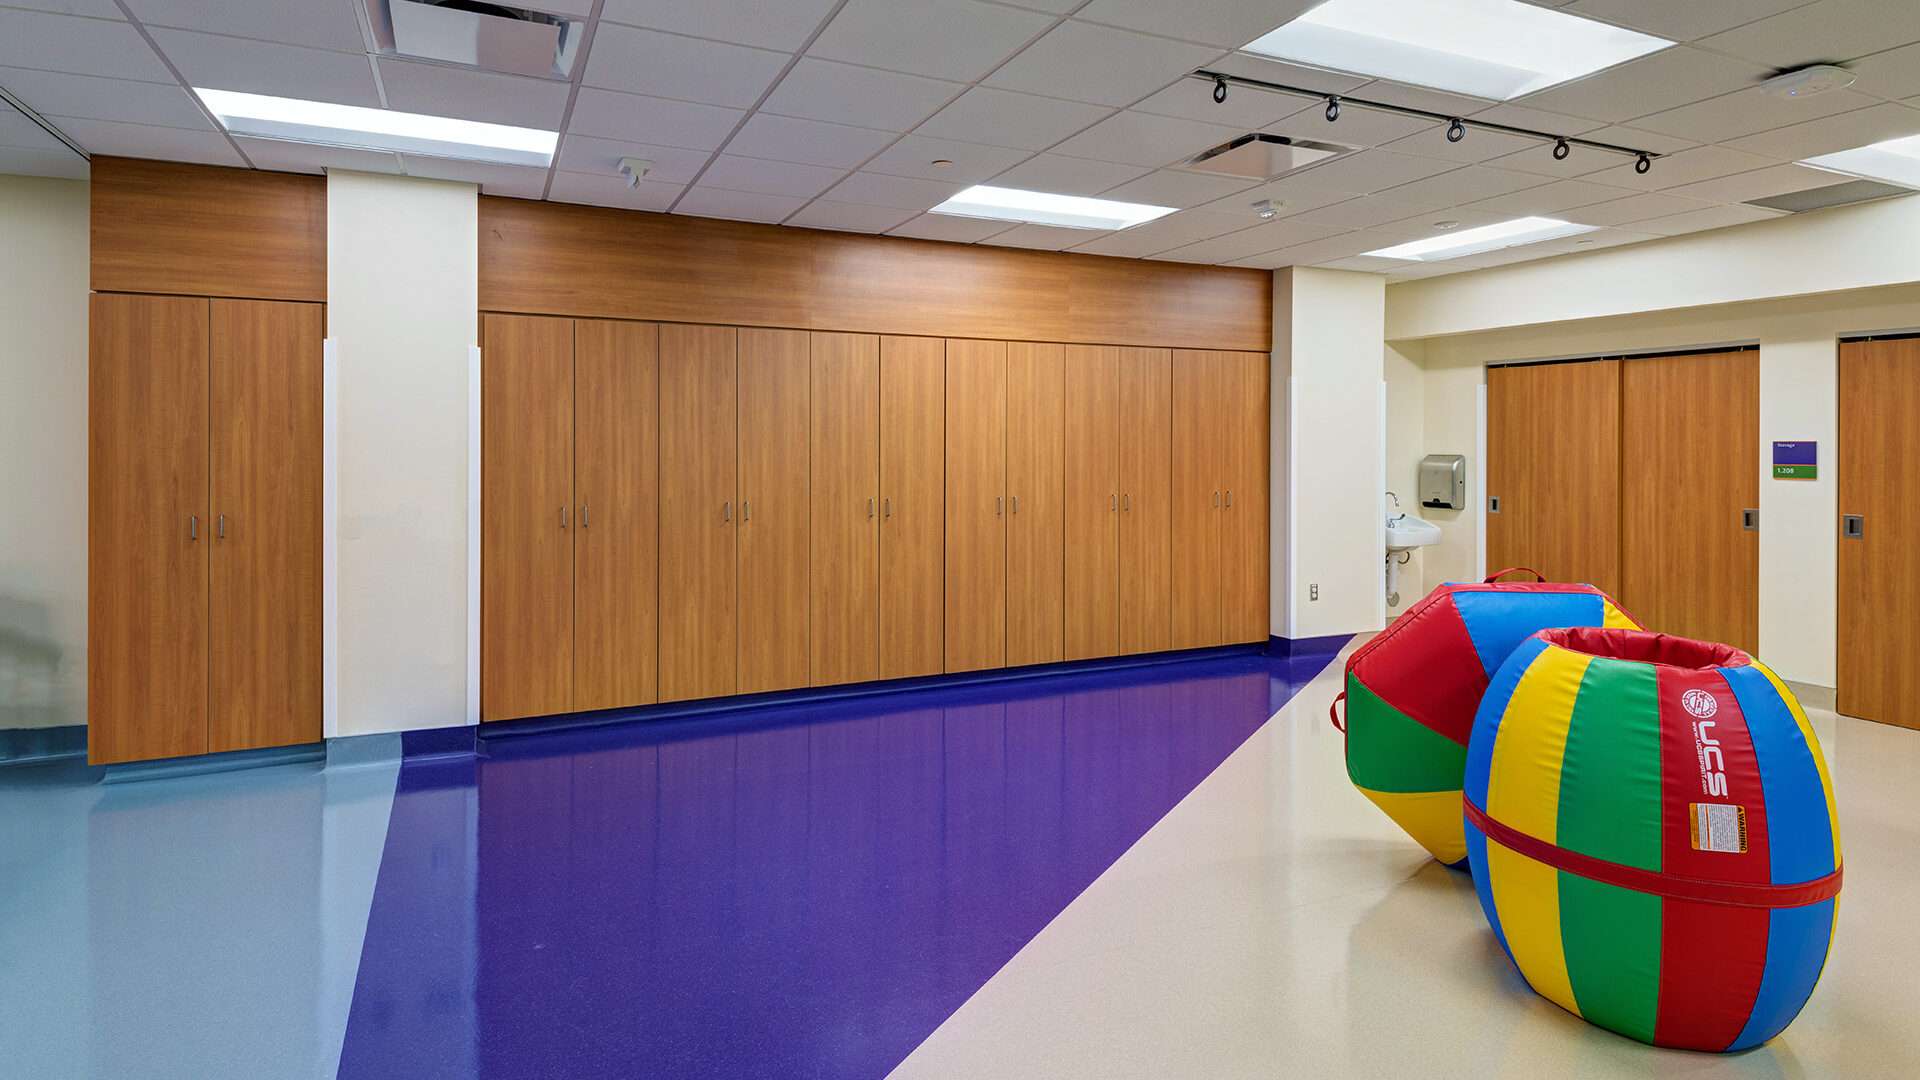 McLane Children's Medical Center